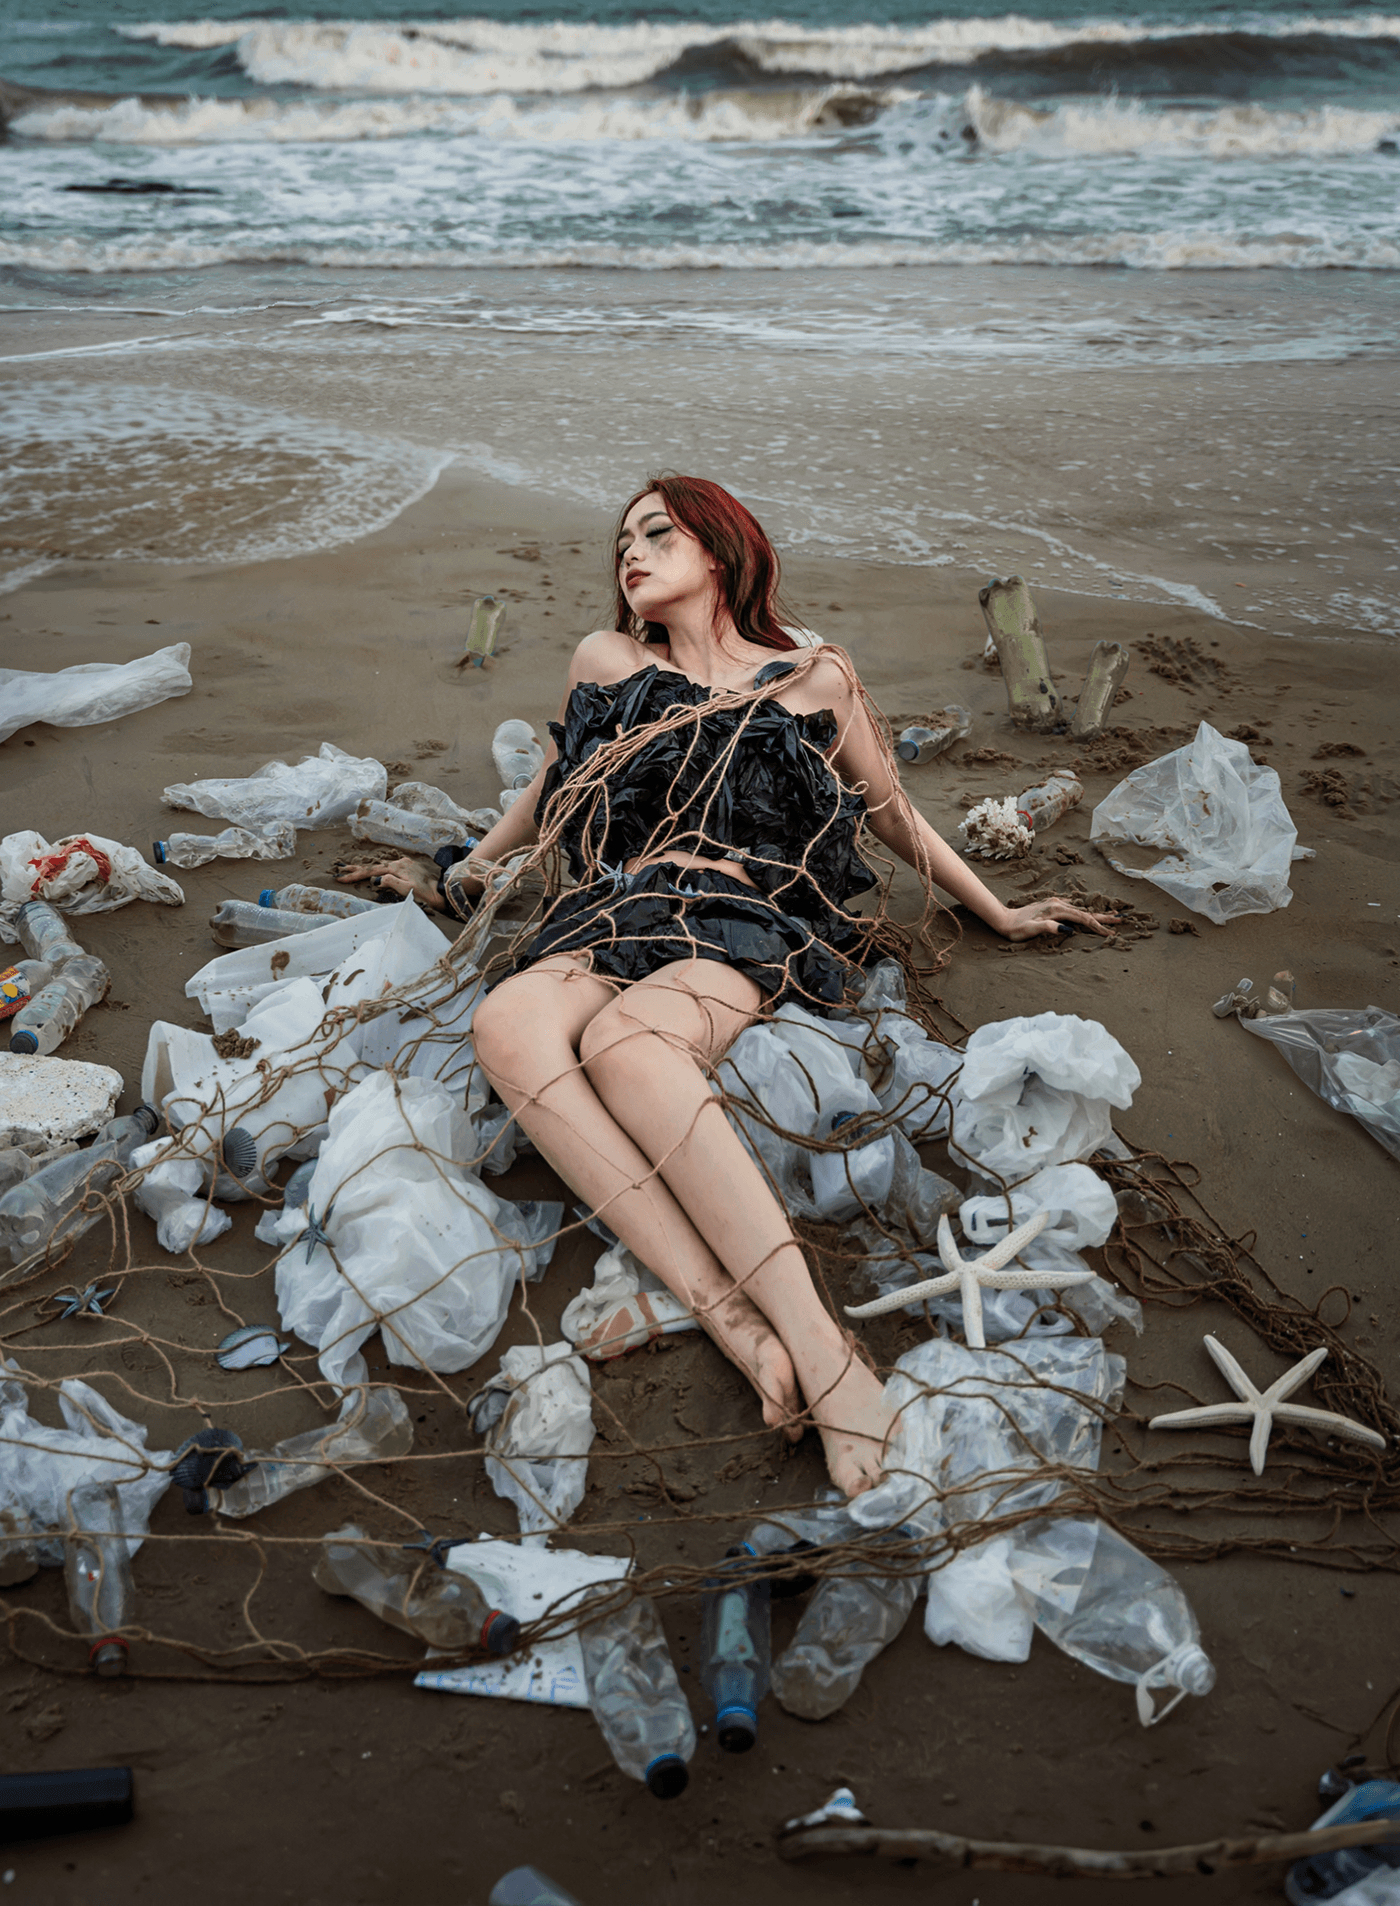 mermaid environment Photography  videography recycle fairytale fantasy artwork desire sea